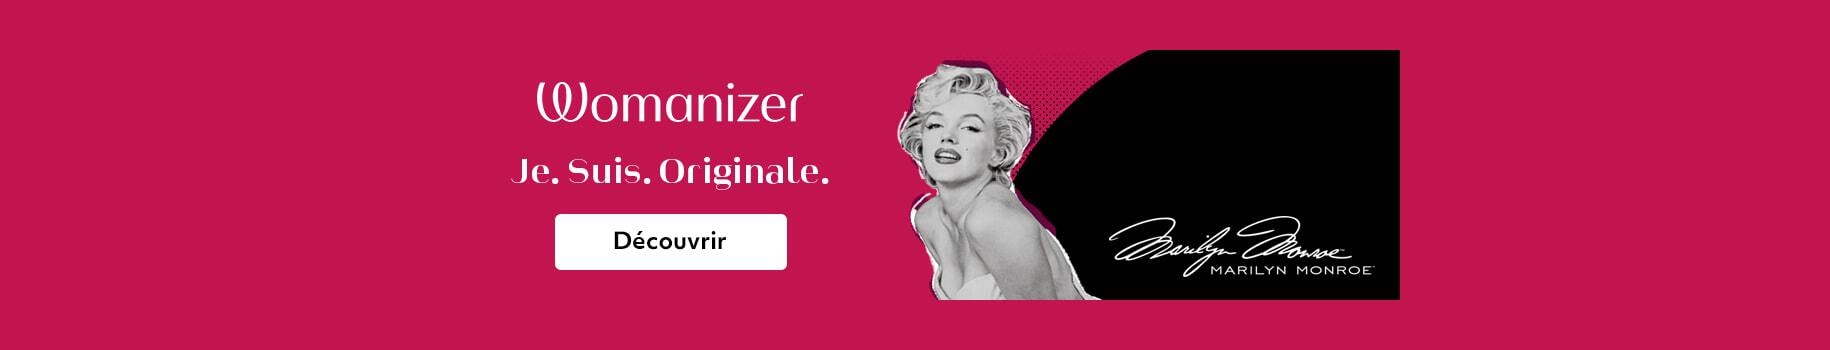 Bannière Womanizer x Marilyn Monroe